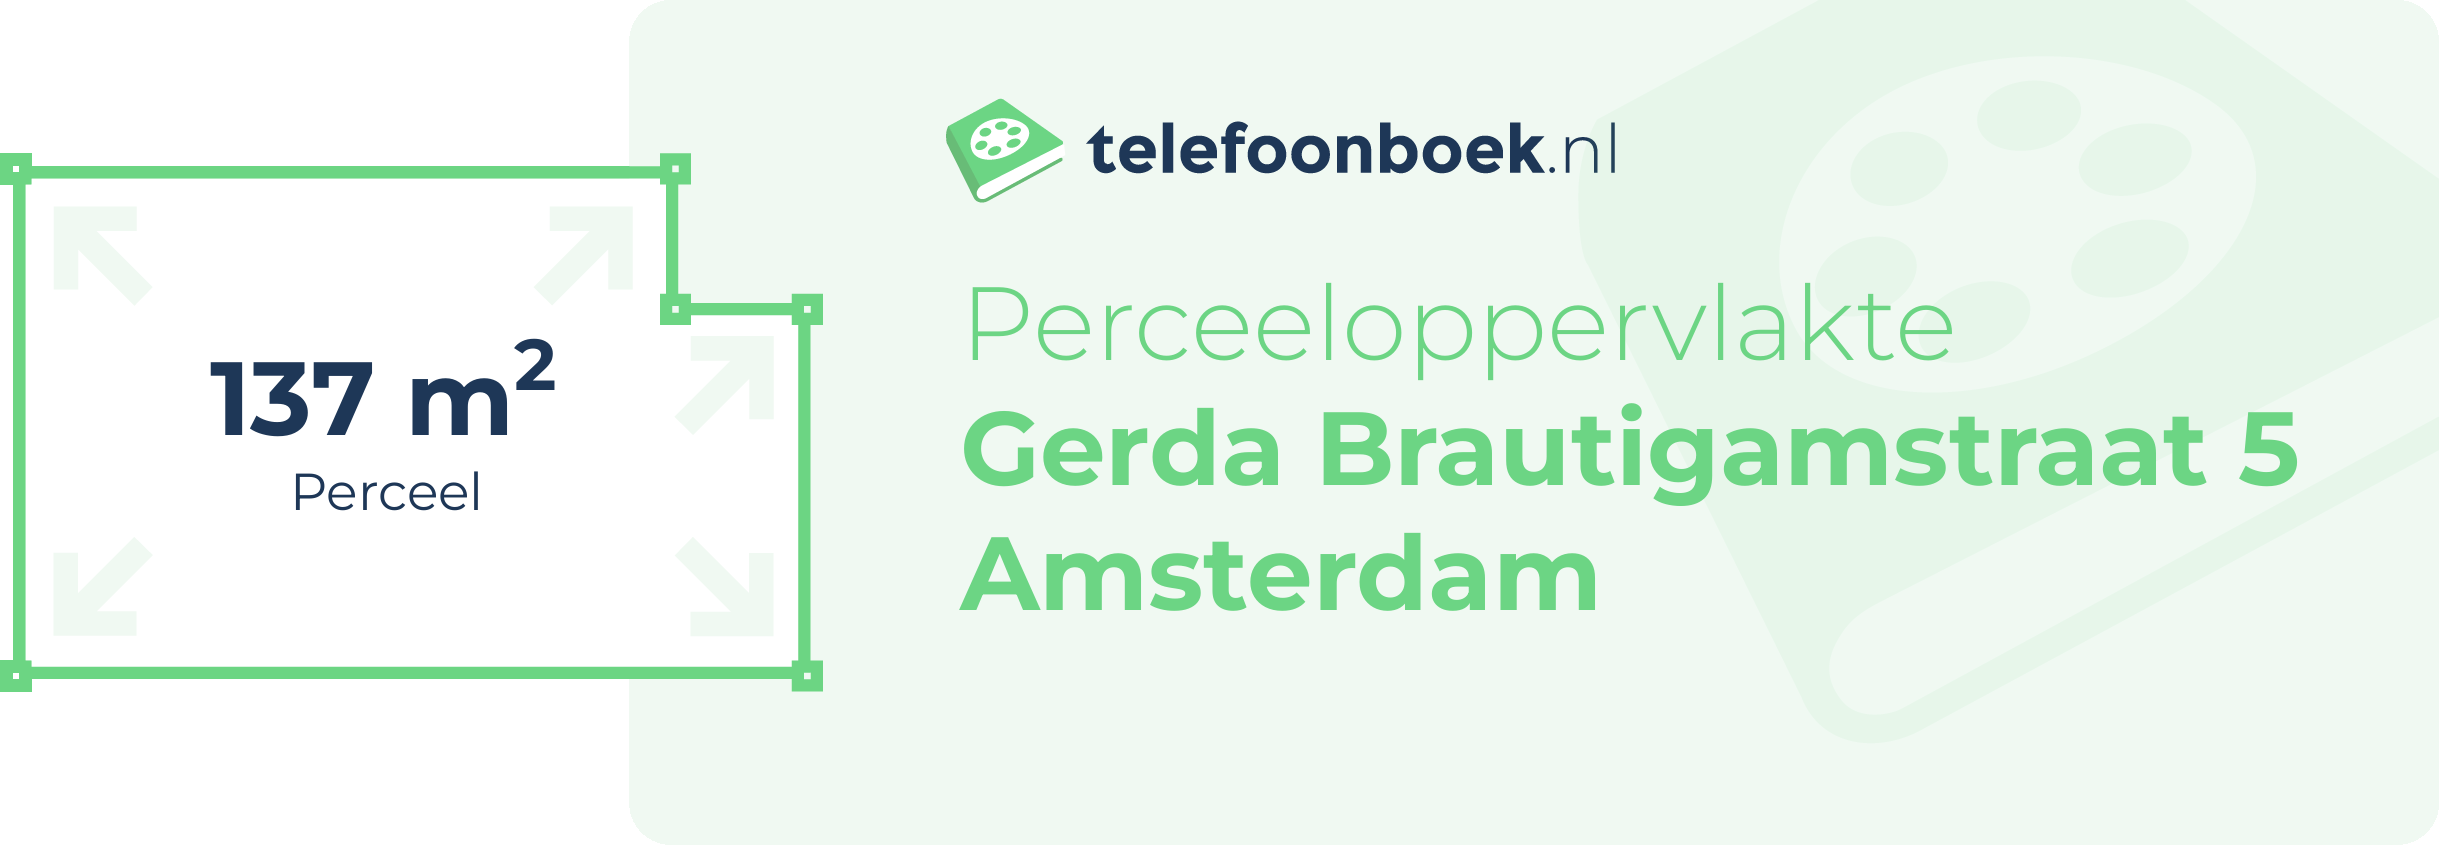 Perceeloppervlakte Gerda Brautigamstraat 5 Amsterdam